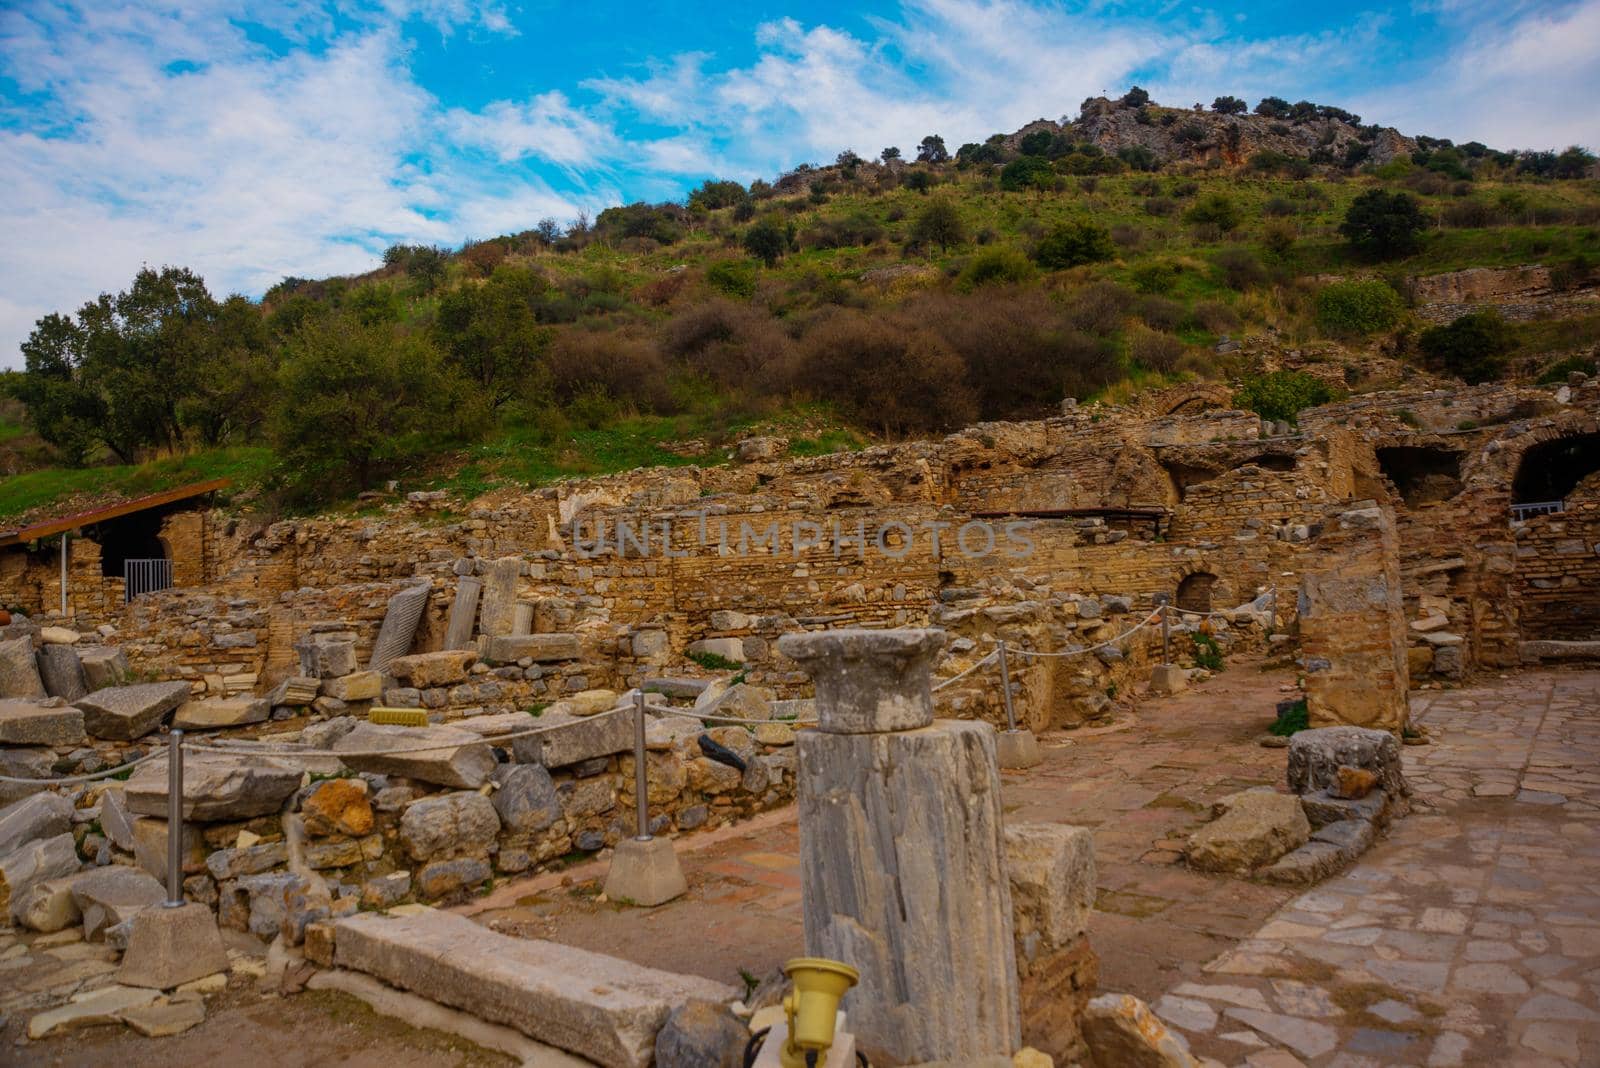 EPHESUS, SELCUK, IZMIR, TURKEY: Ruins on the street of the ancient city of Ephesus in the Turkish city of Selcuk, Izmir province.